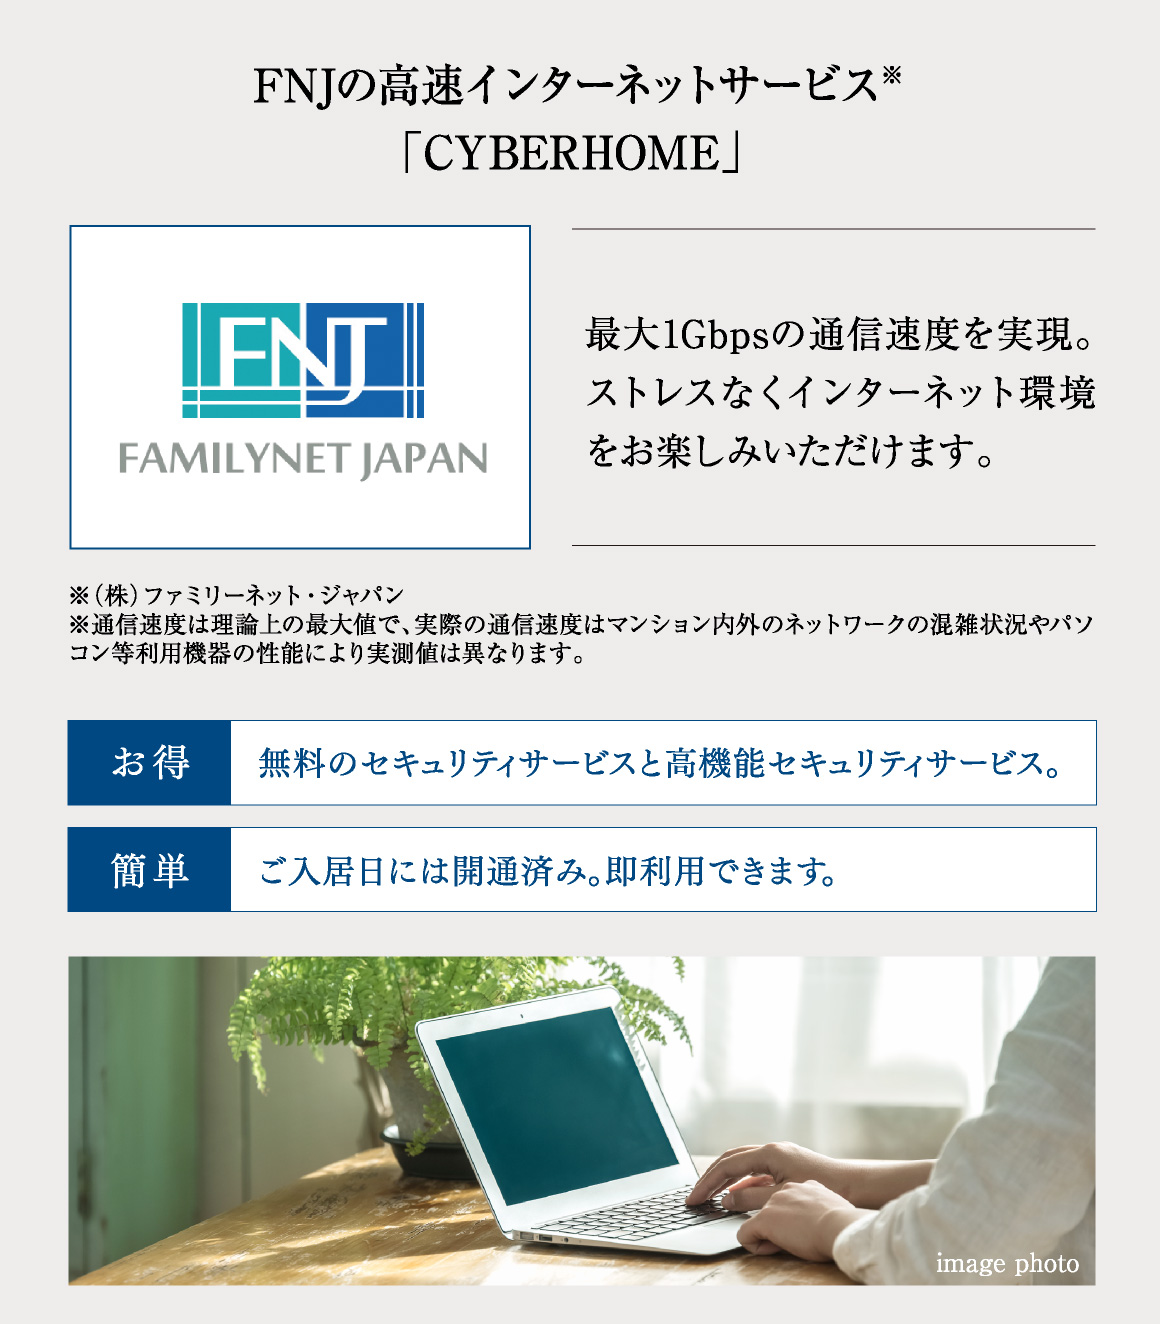 FNJの高速インターネットサービス「CYBERHOME」